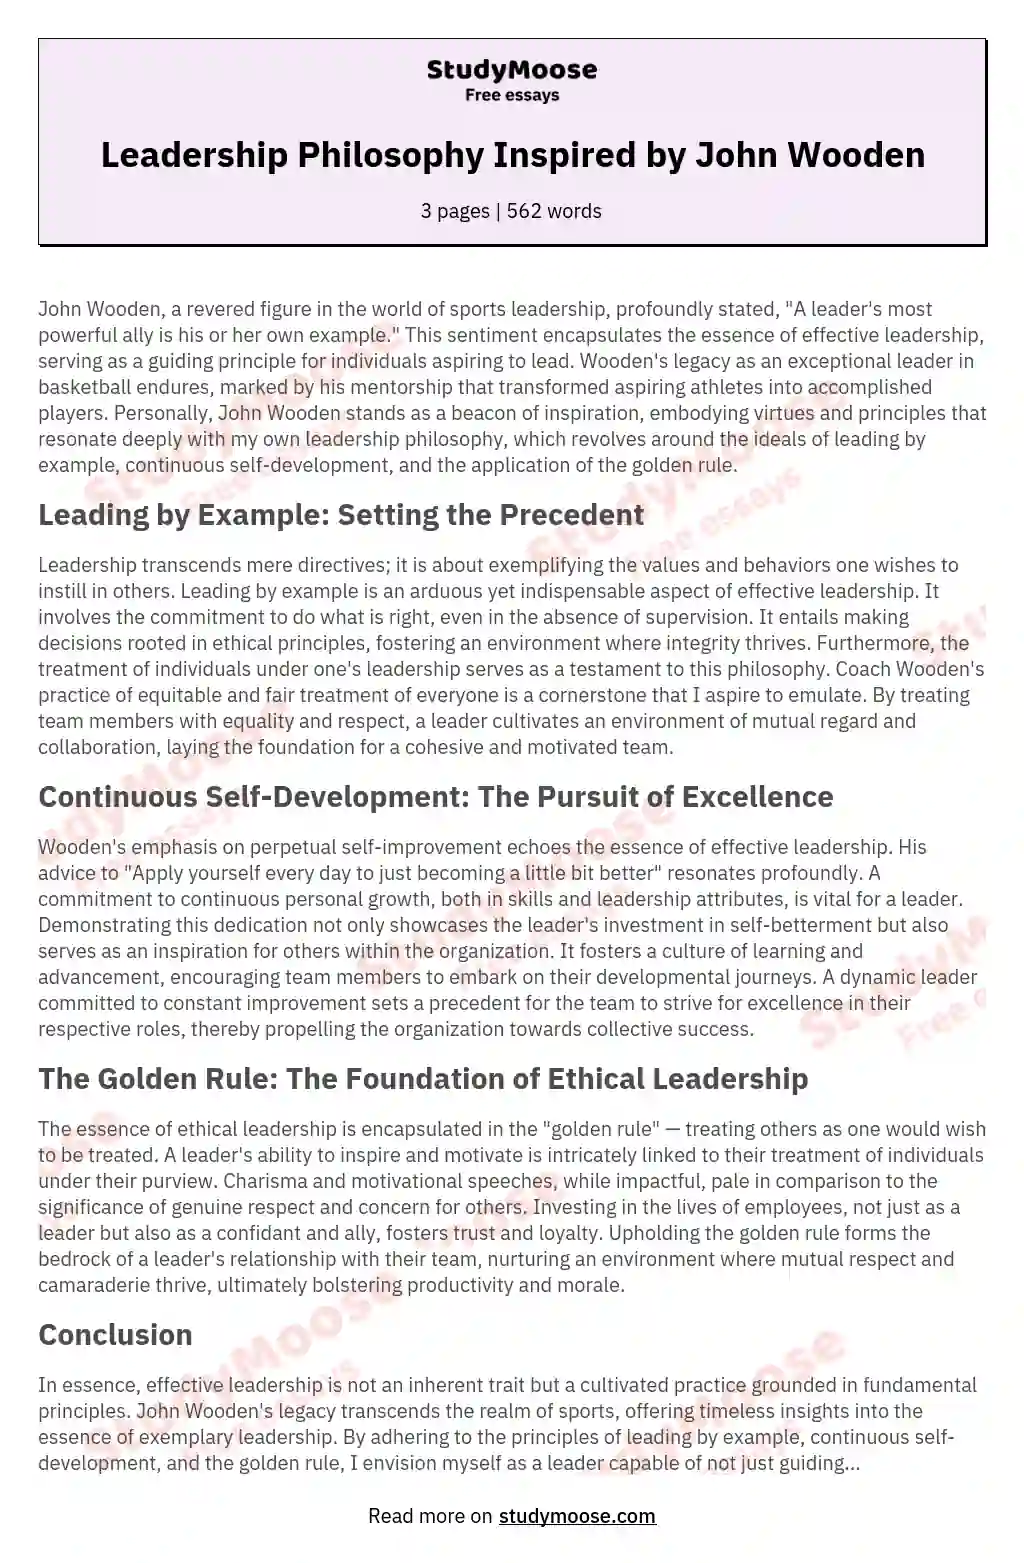 Leadership Philosophy Inspired by John Wooden essay